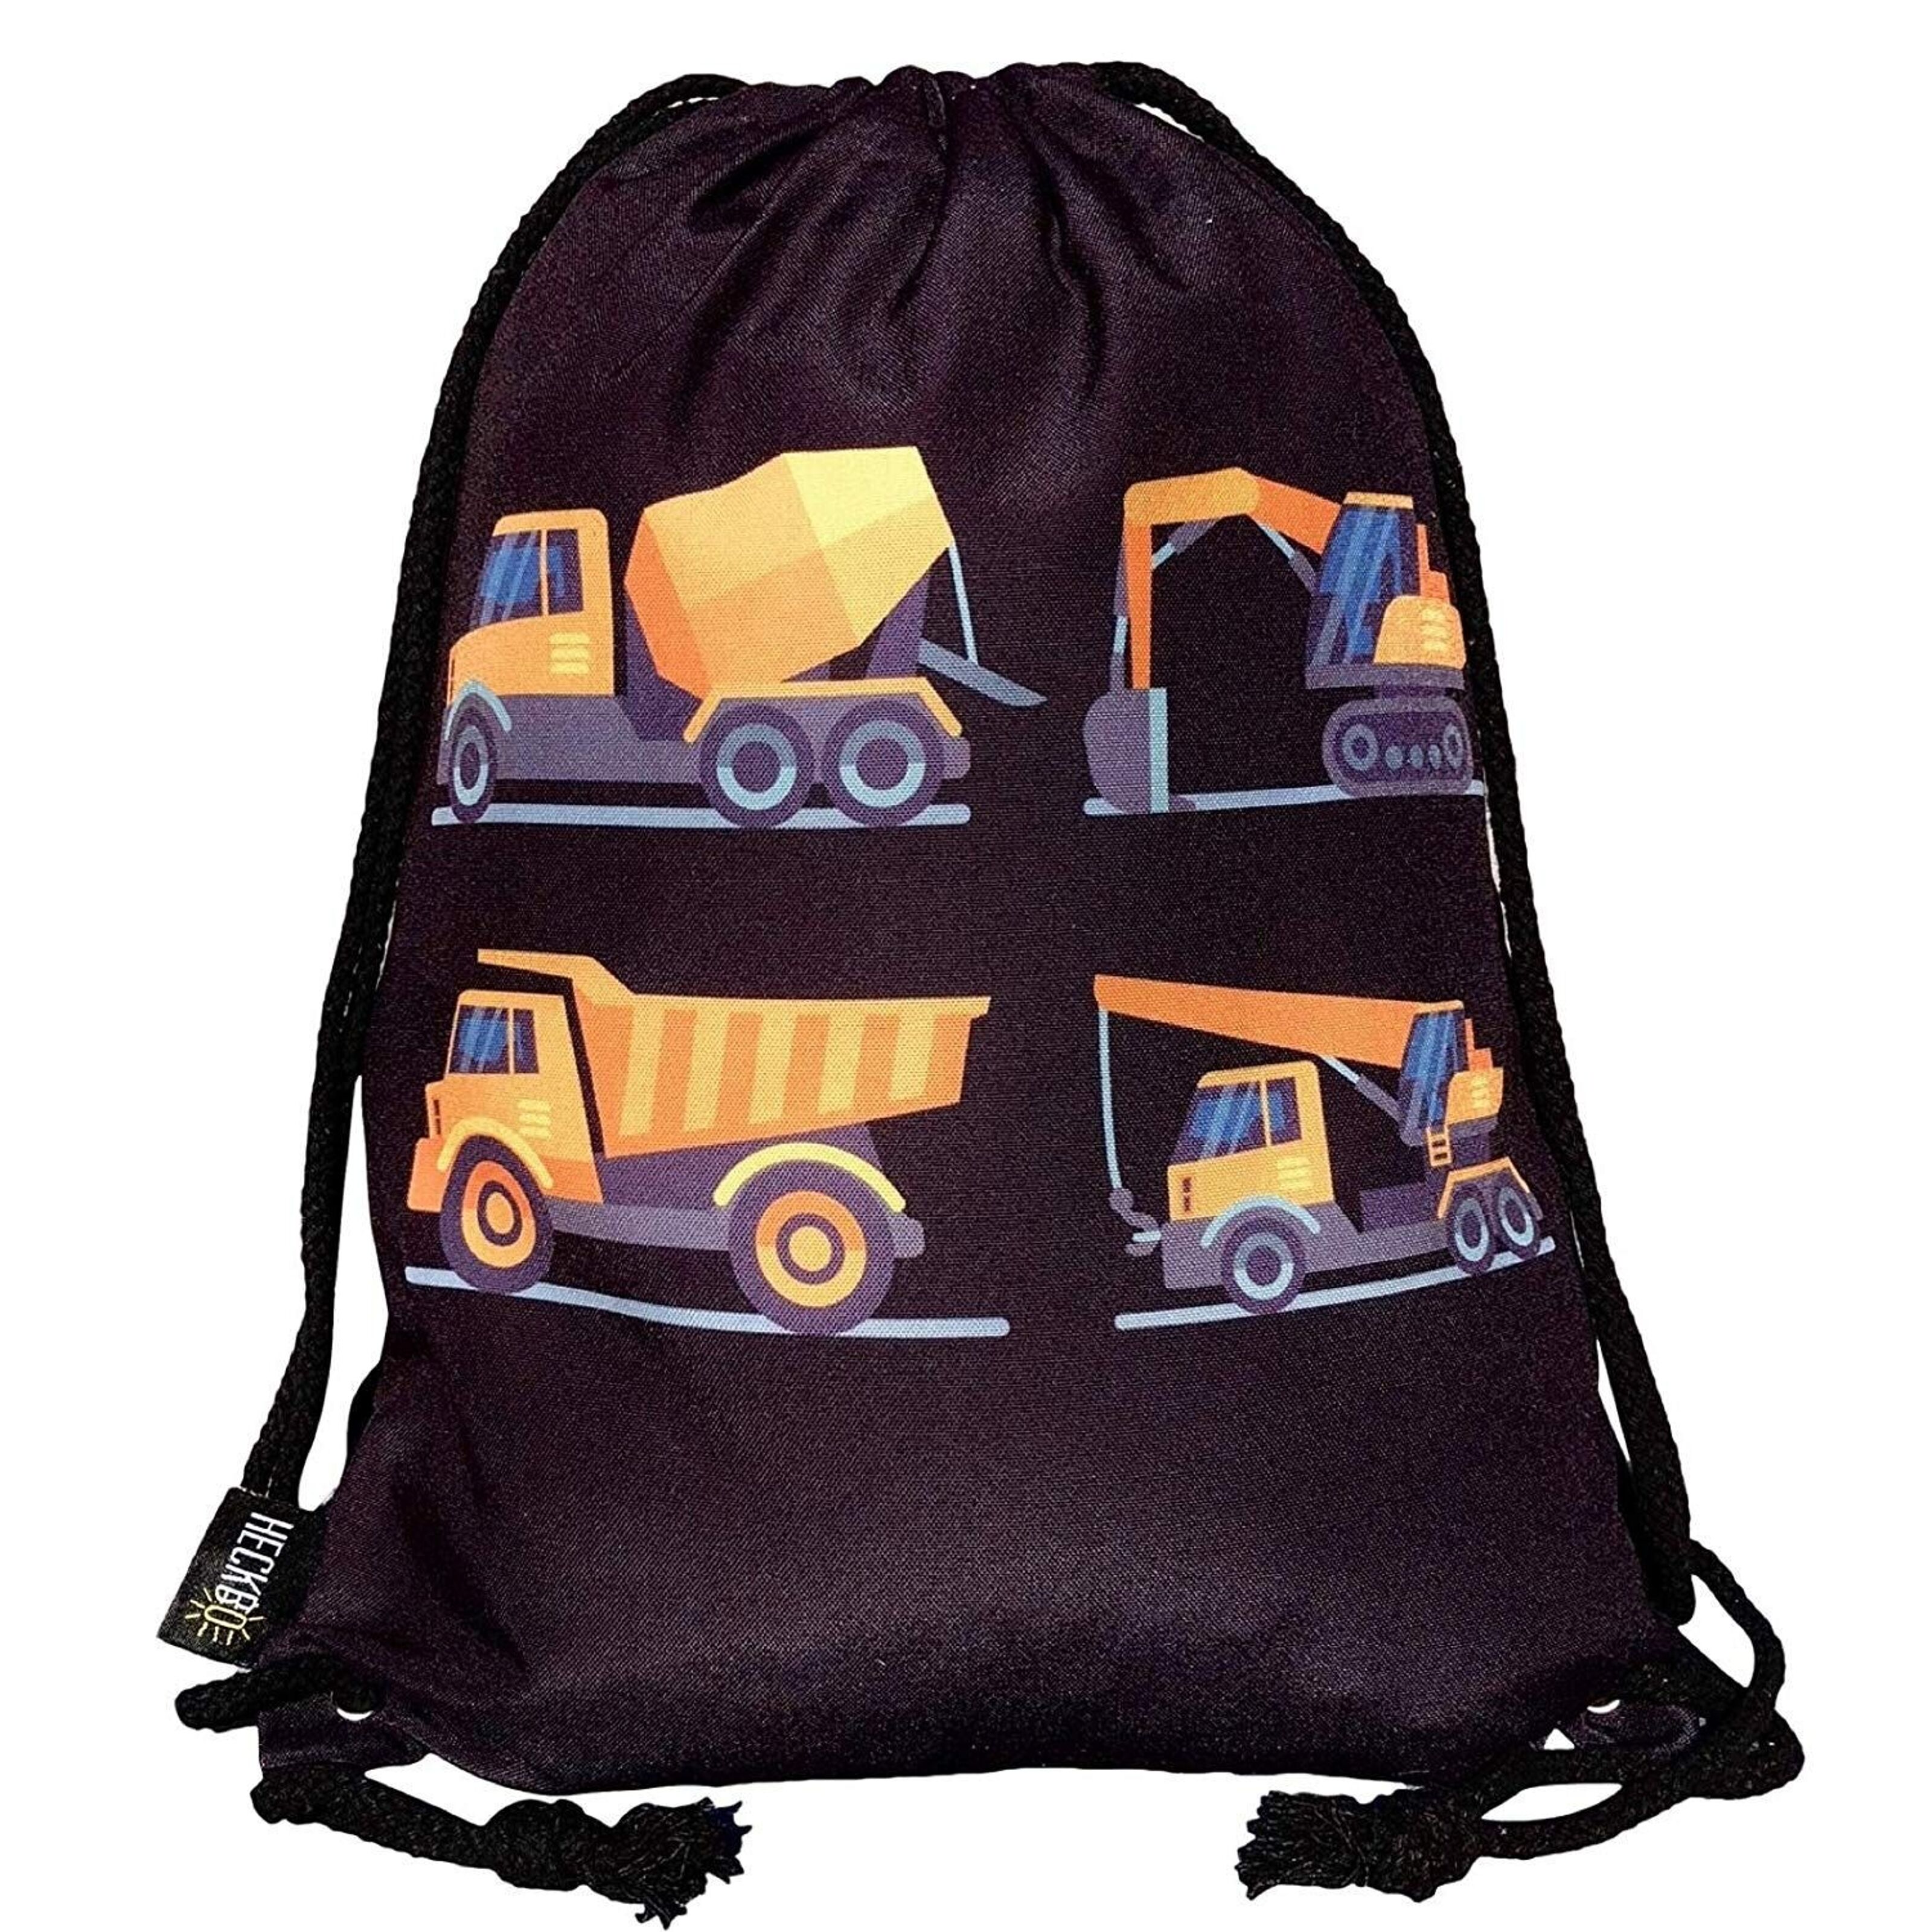 Buy wholesale Children's boys' gym bag - black, printed on both sides with  4 construction vehicles - for kindergarten, crèche, travel, sports -  backpack, play bag, sports bag, shoe bag